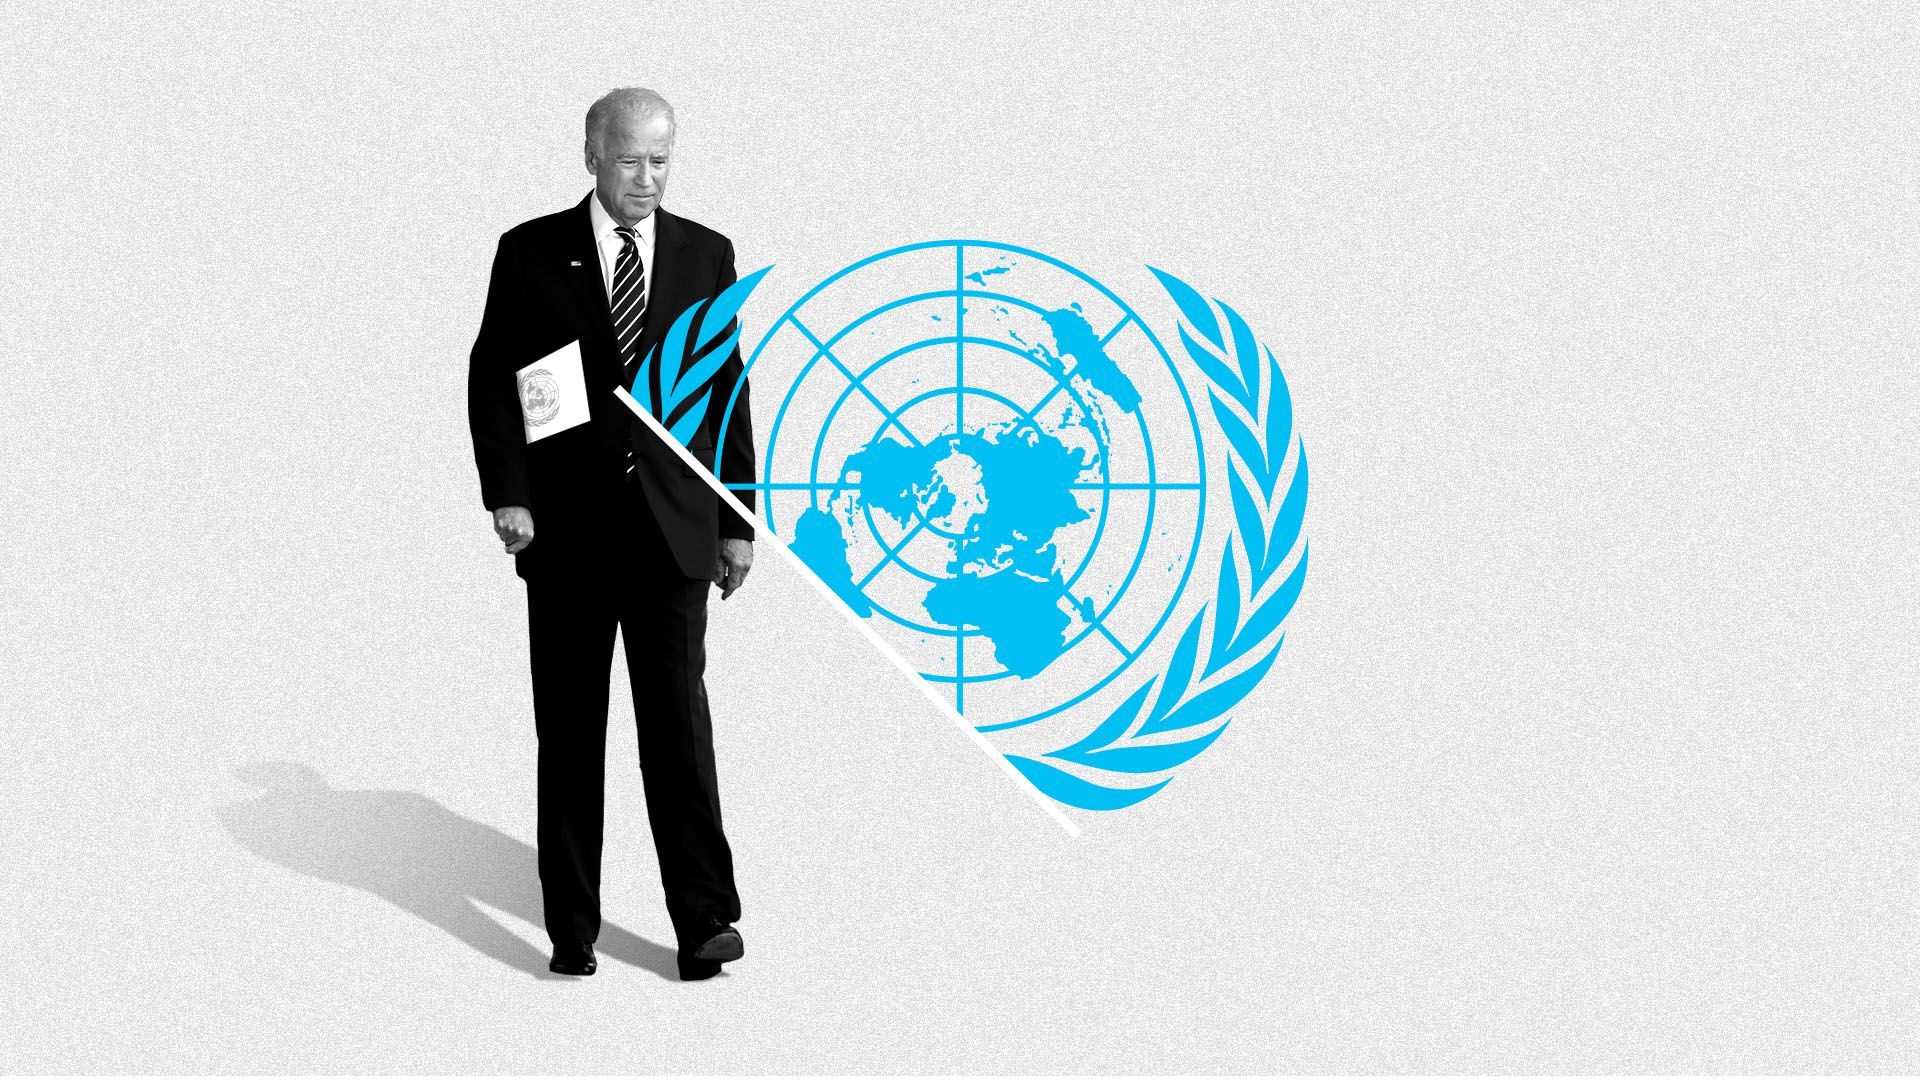 Photo illustration of Joe Biden walking towards the UN symbol